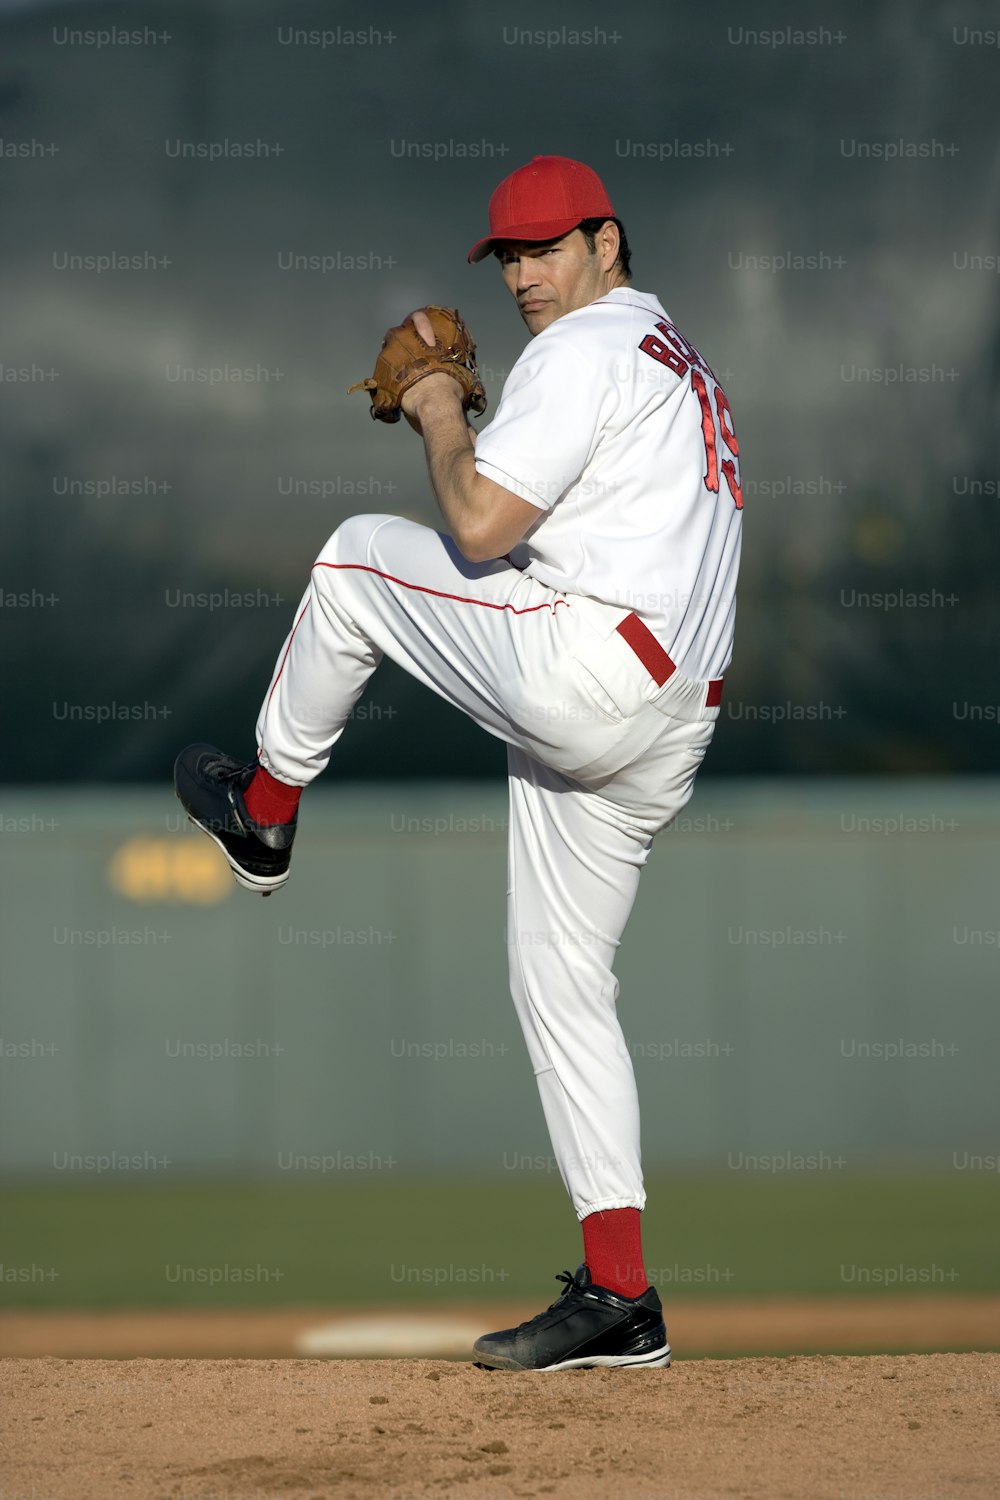 Un homme en uniforme de baseball lançant une balle de baseball